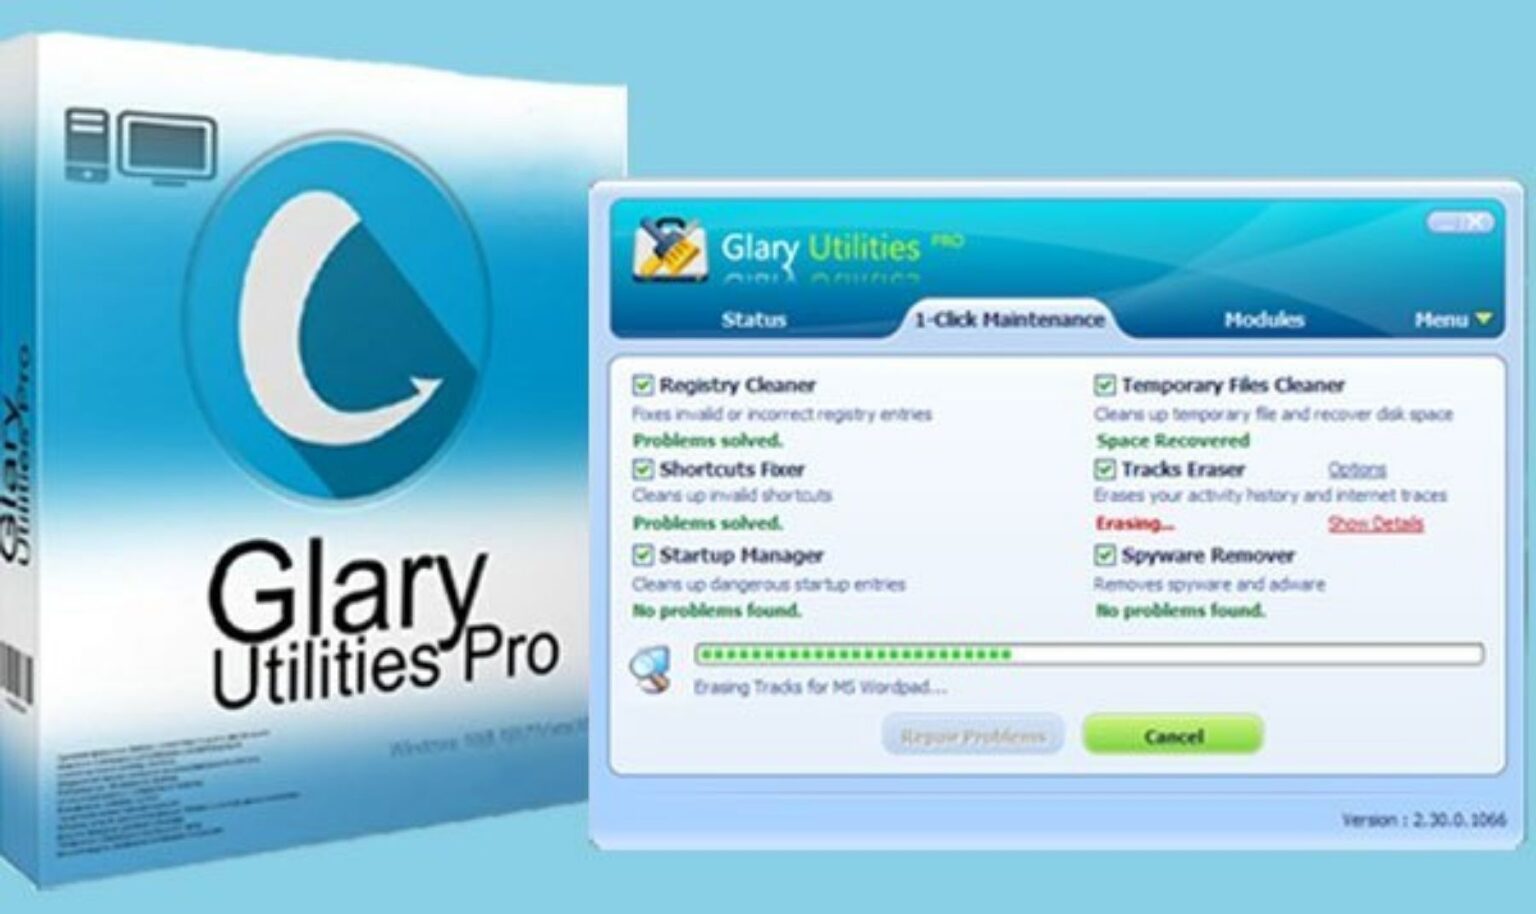 Glary Utilities Pro 6.2.0.5 downloading